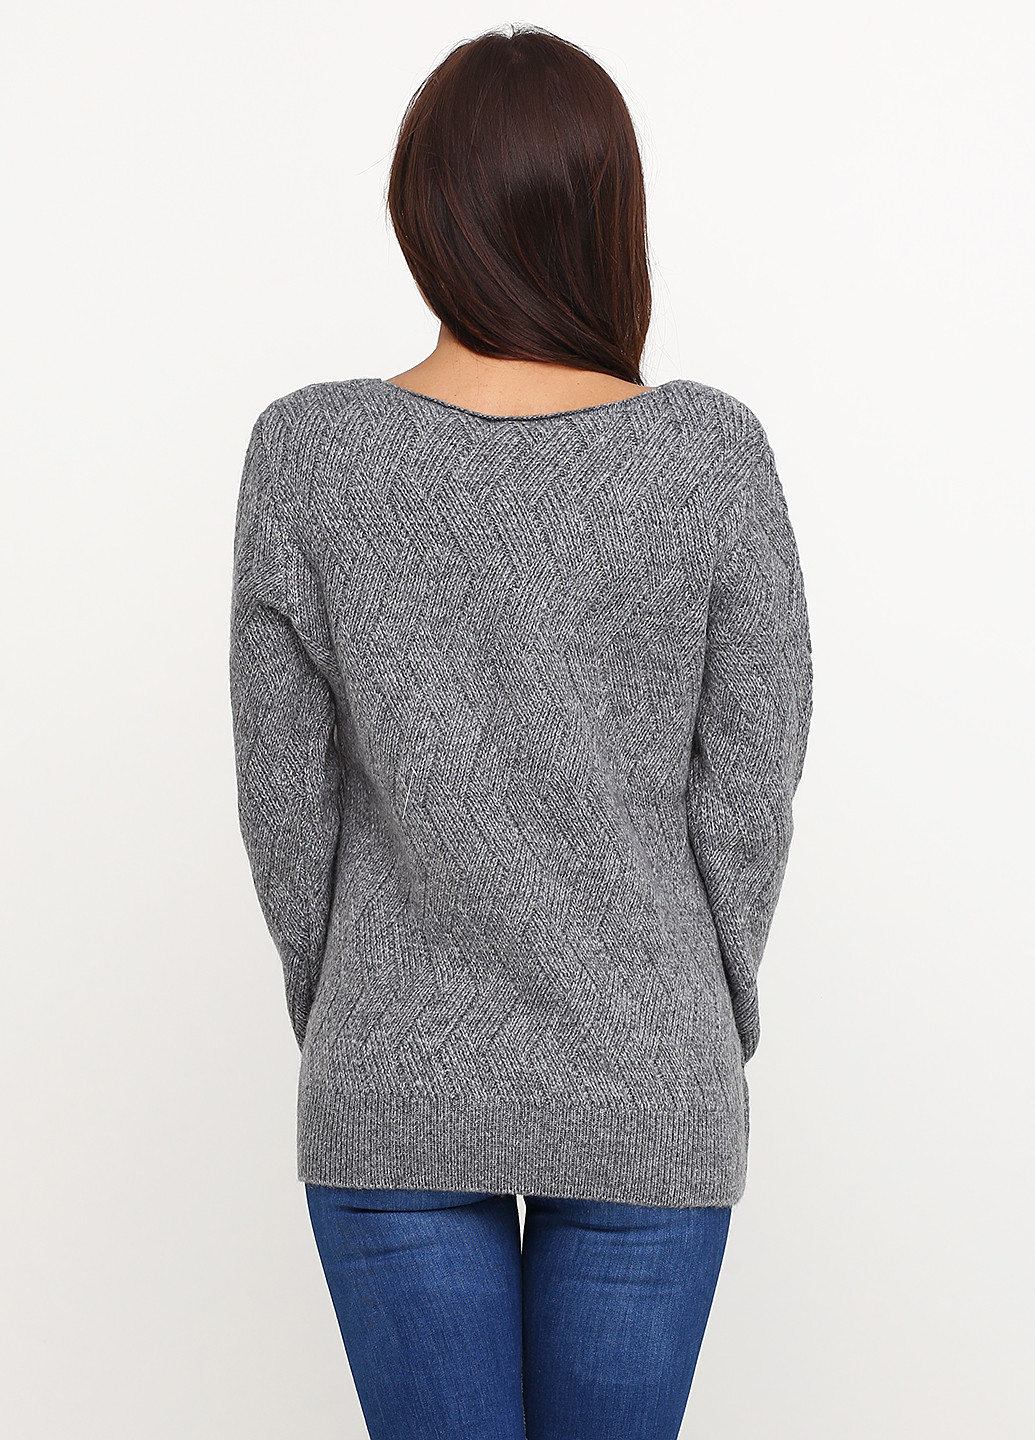 Темно-серый демисезонный пуловер пуловер Street One